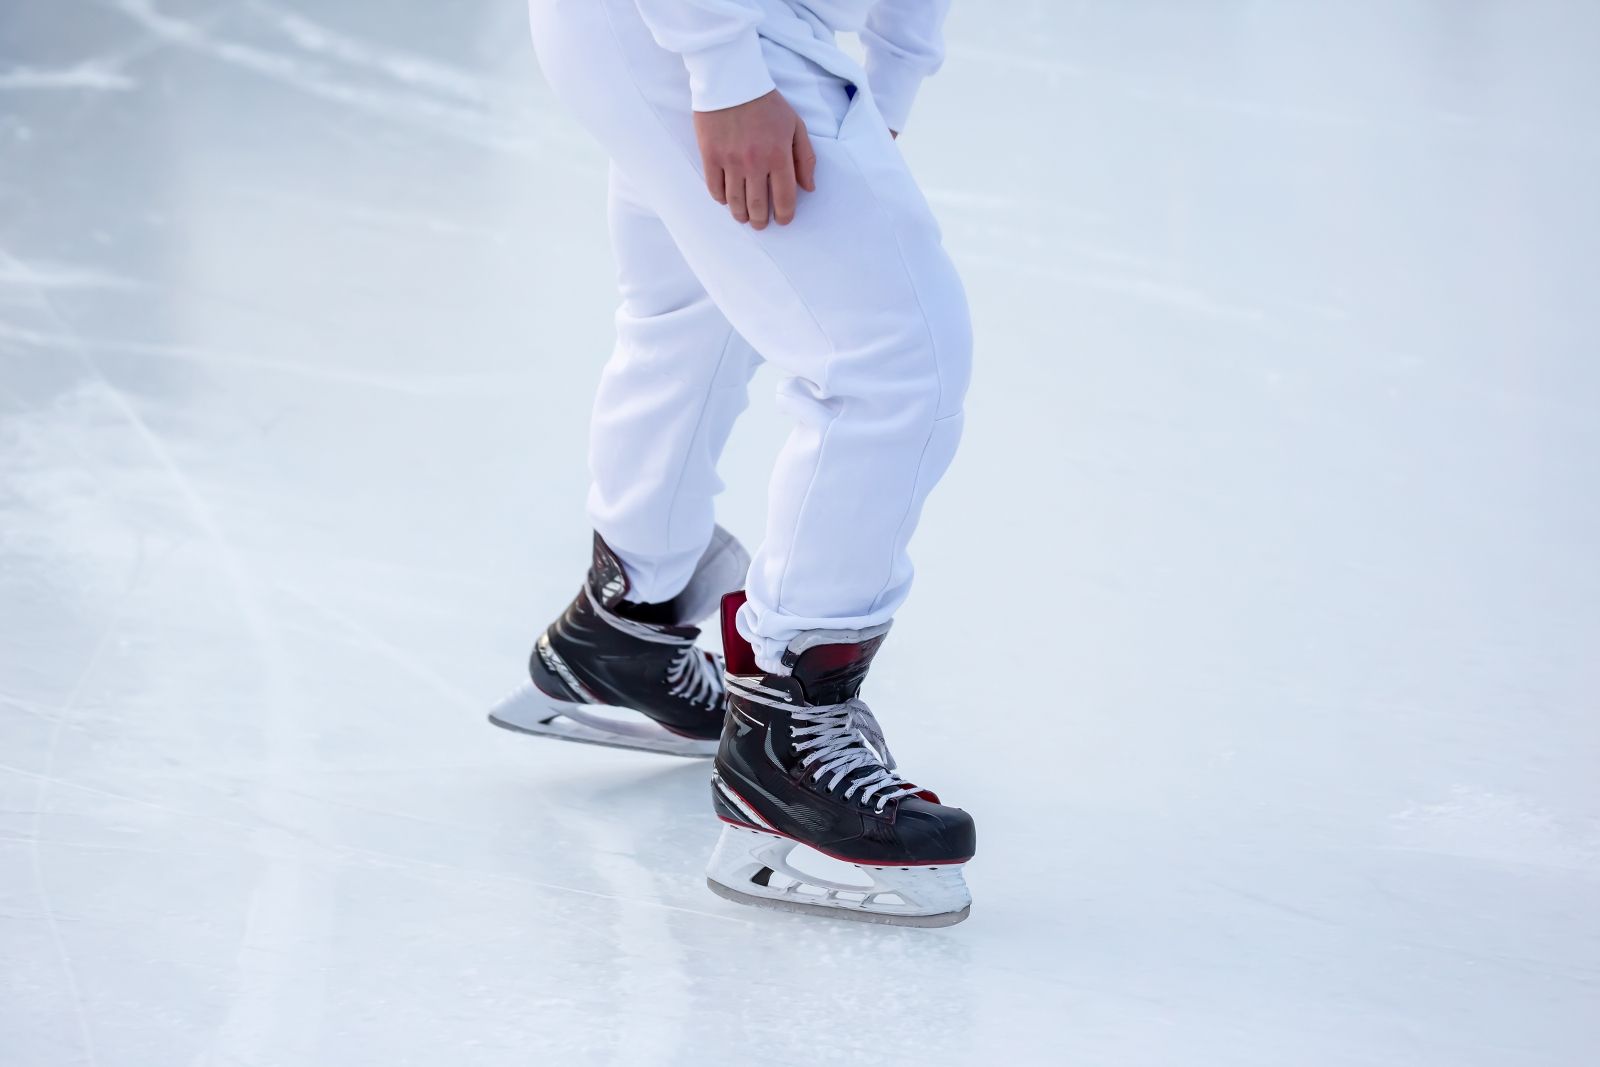 legs-skater-ice-rink-hobbies-winter-sports_1600x1067.jpg